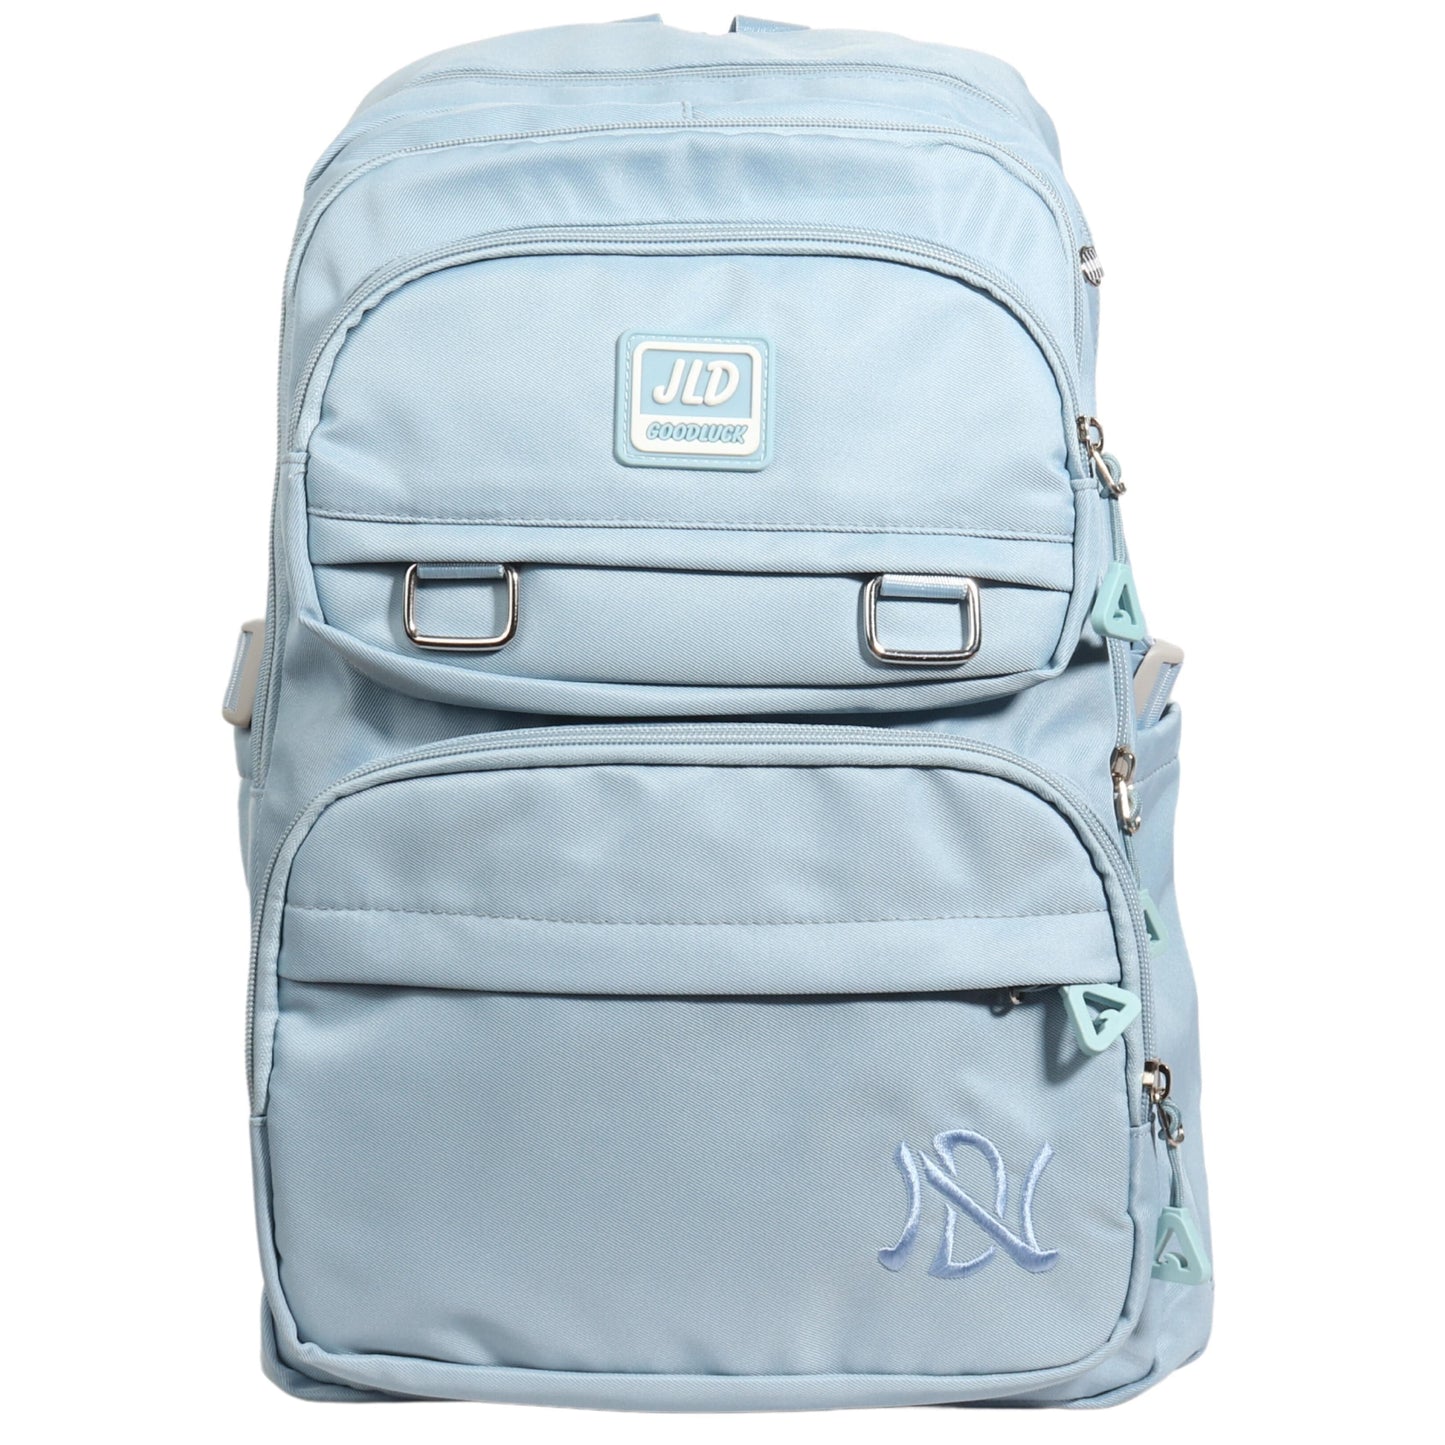 Beyond Marketplace School Bags L / Blue High Quality Waterproof School Bag